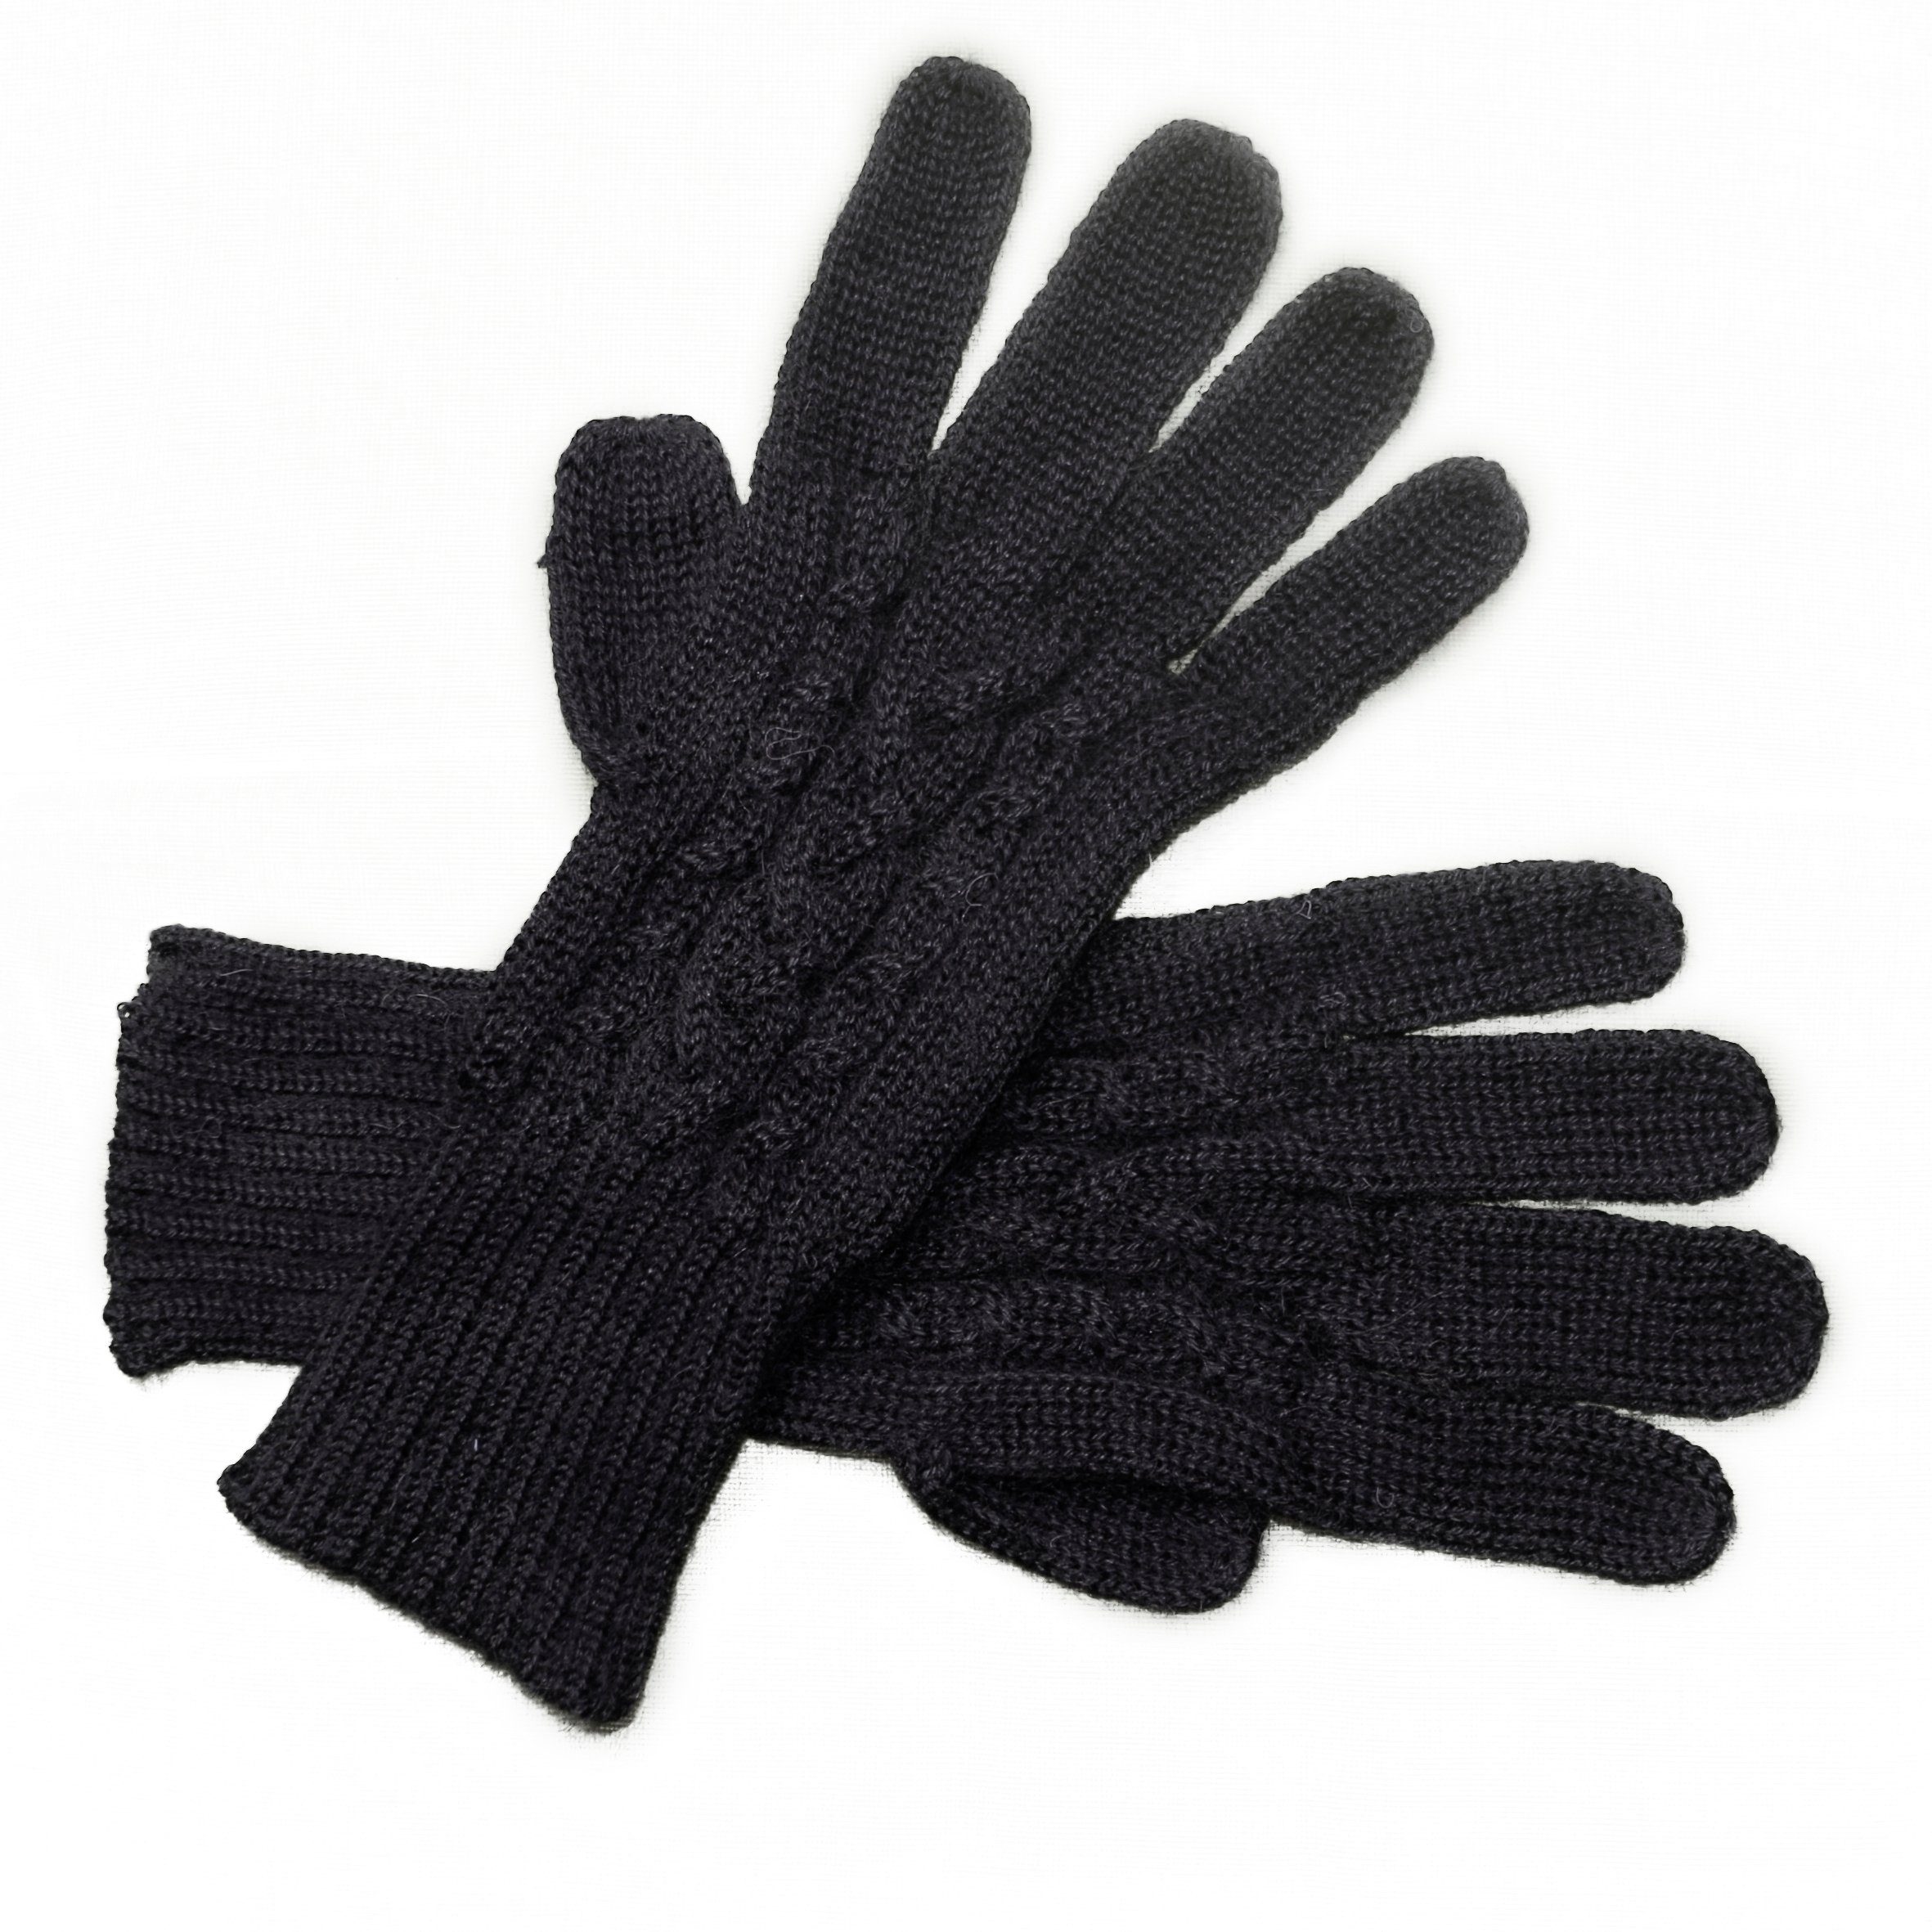 aus Gear Posh Fingerhandschuhe Alpakawolle Guantibrada schwarz 100% Alpaka Strickhandschuhe